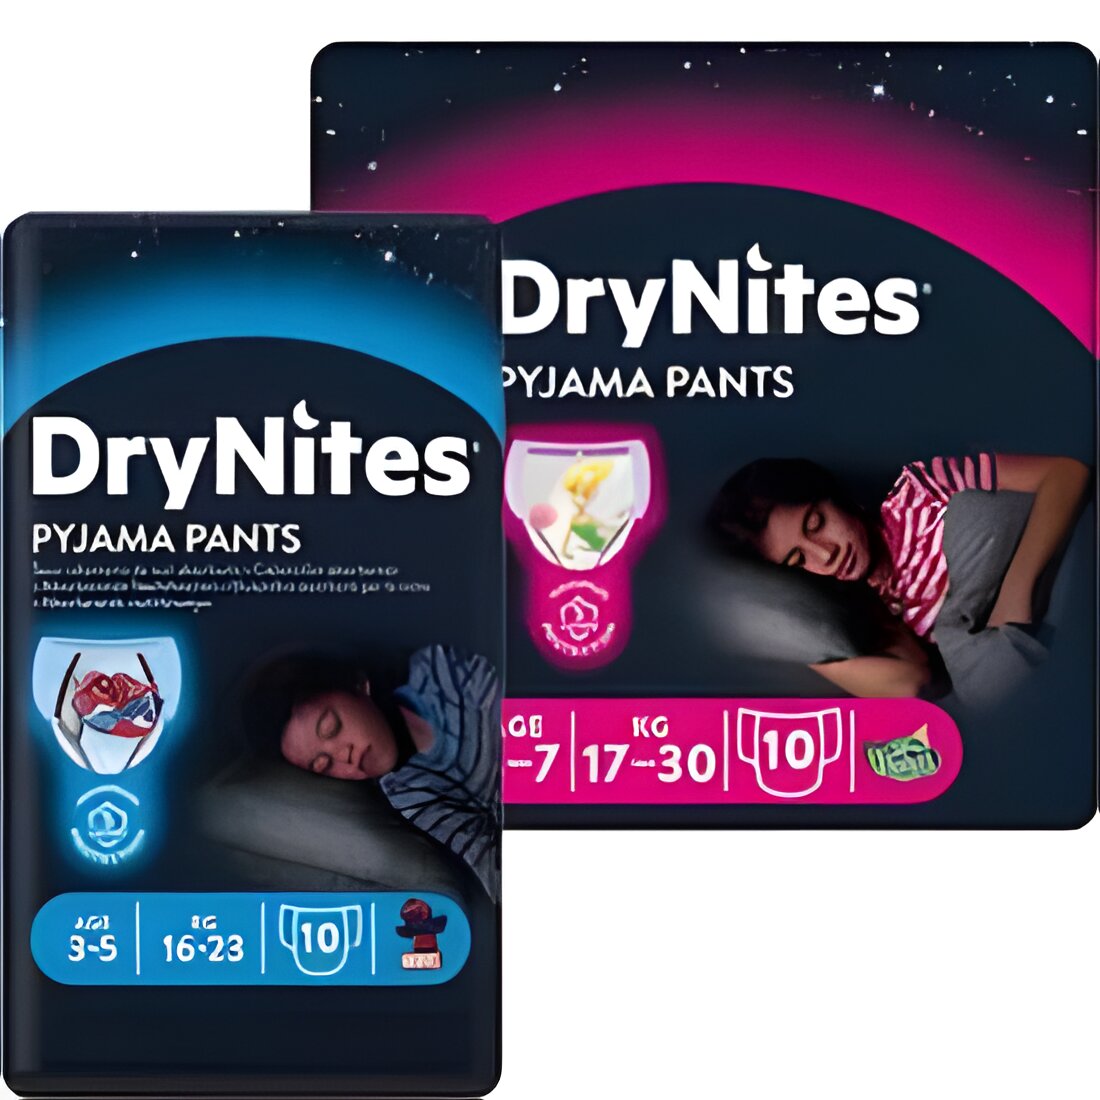 Free Huggies DryNites Pyjama Pants